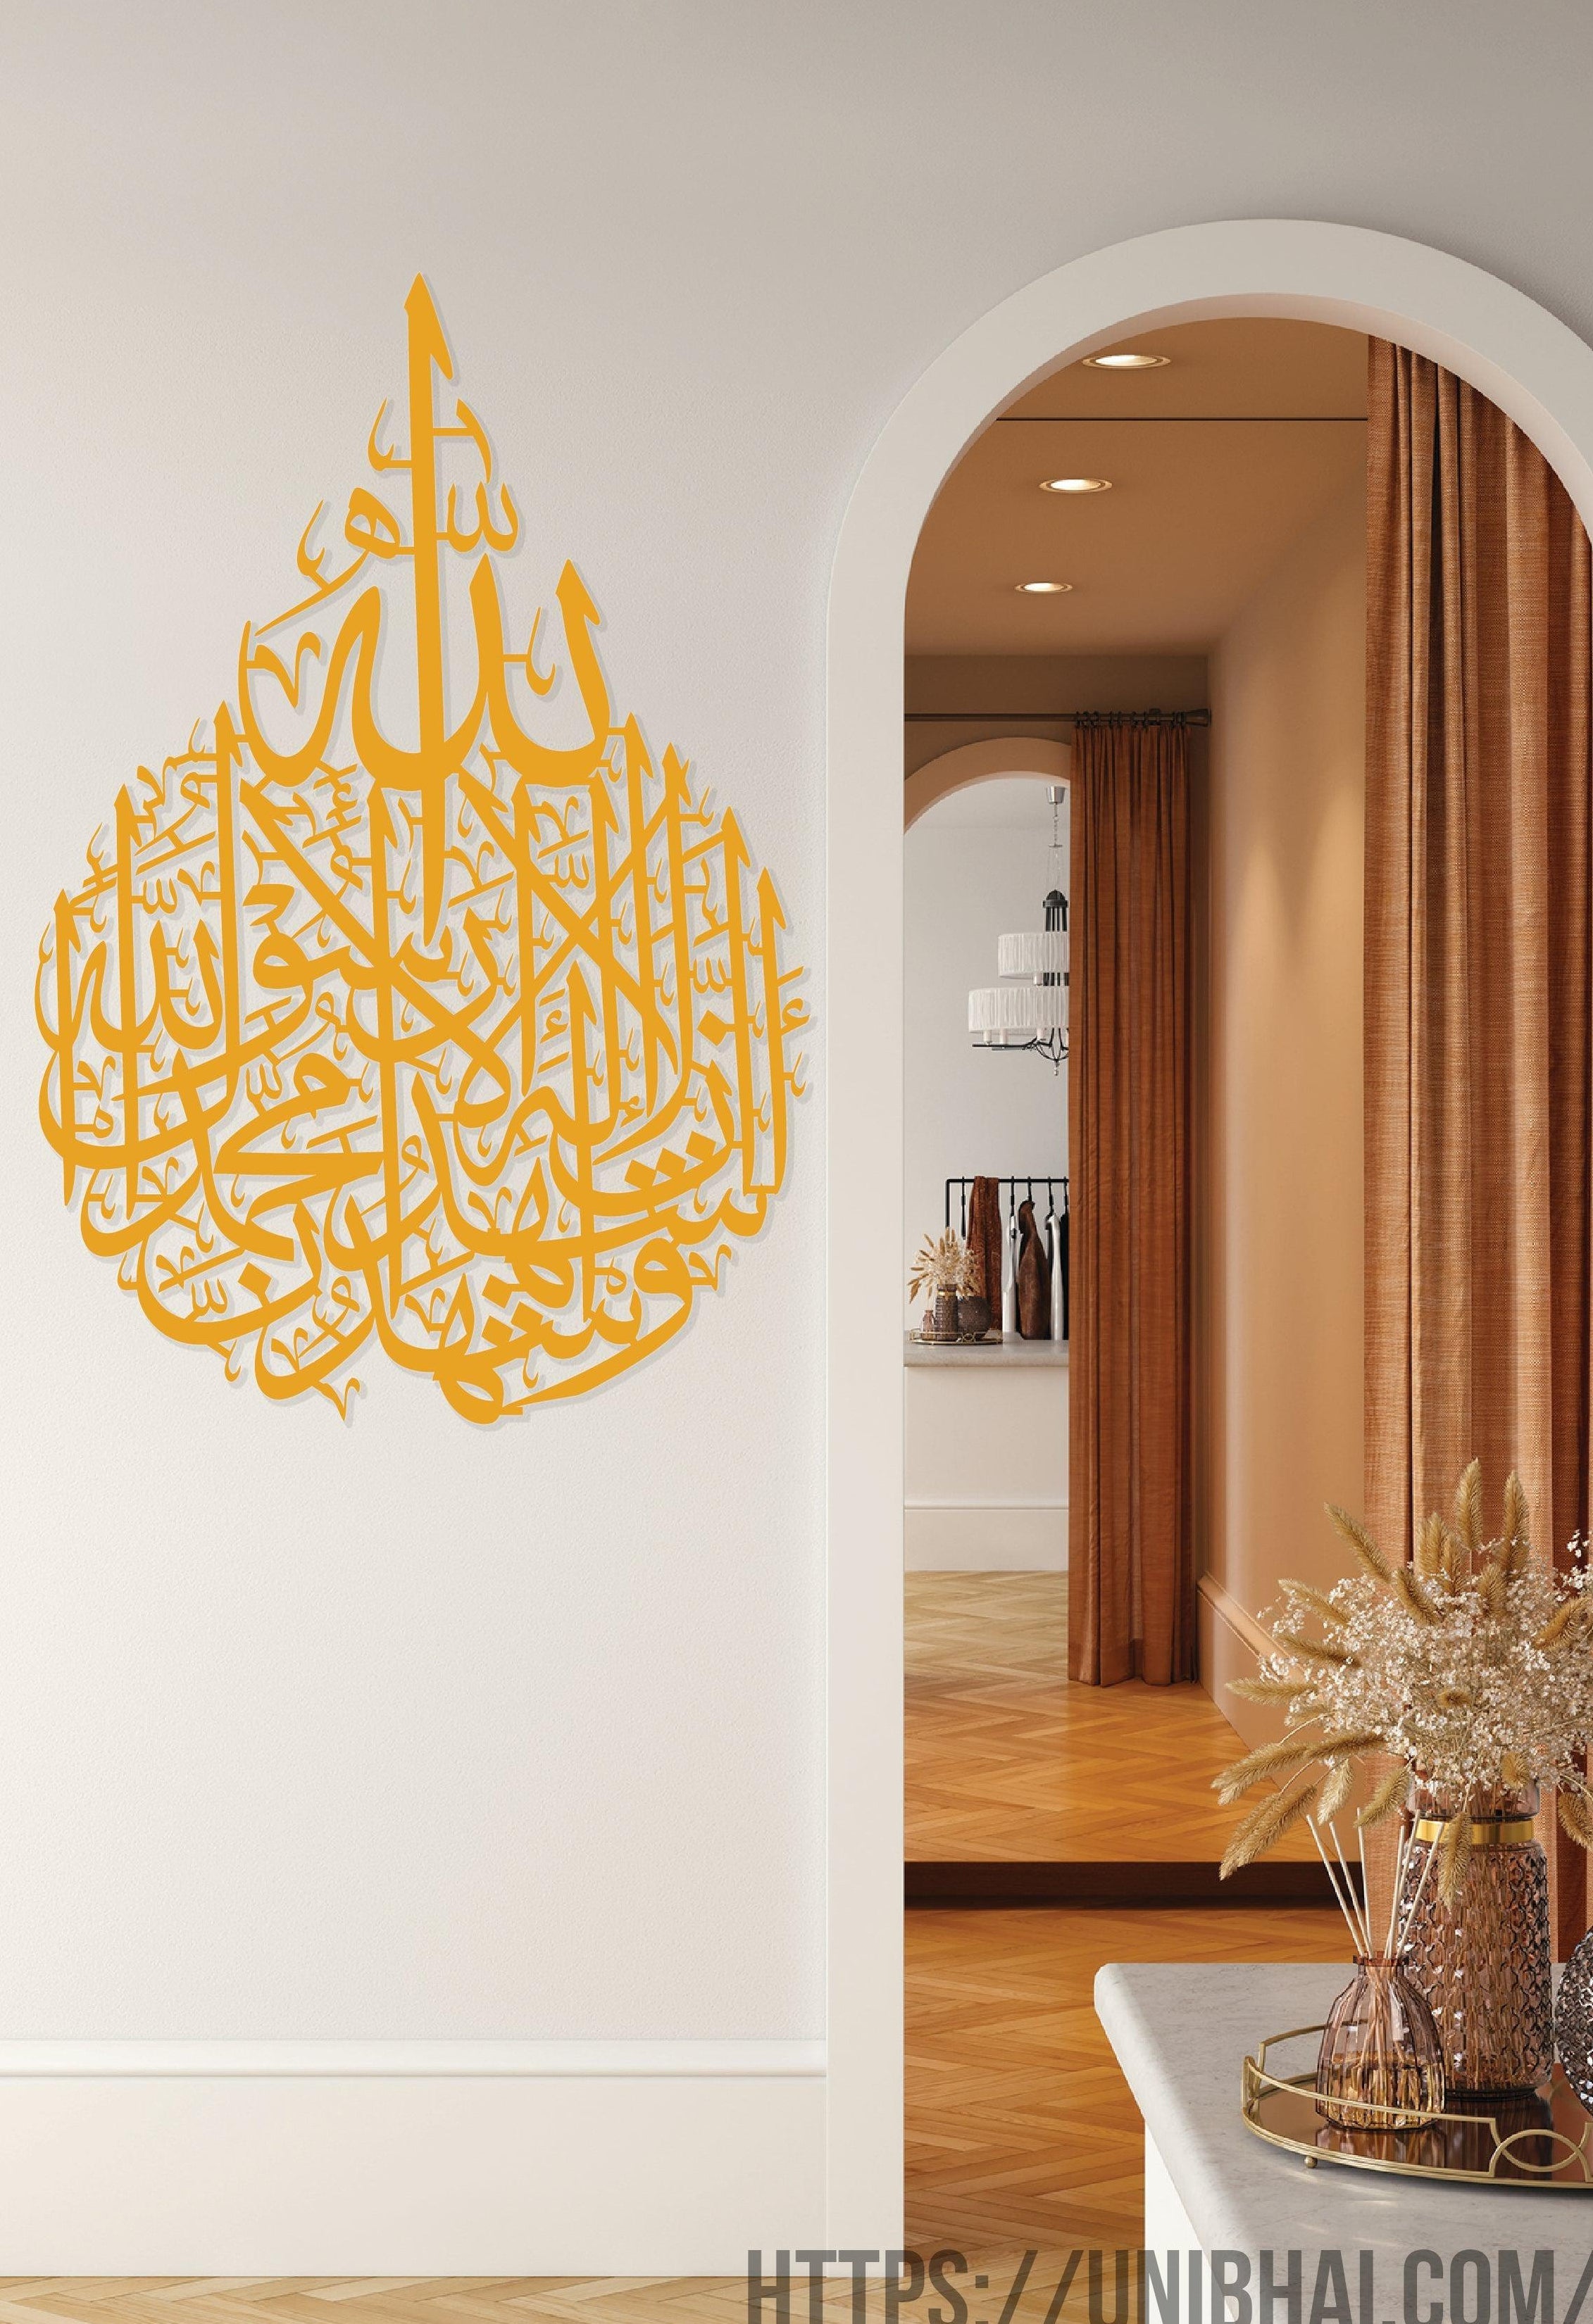 Metal Kalima Shahada Islamic Wall Art, Islamic Home Decor, Islamic Art, Arabic Calligraphy